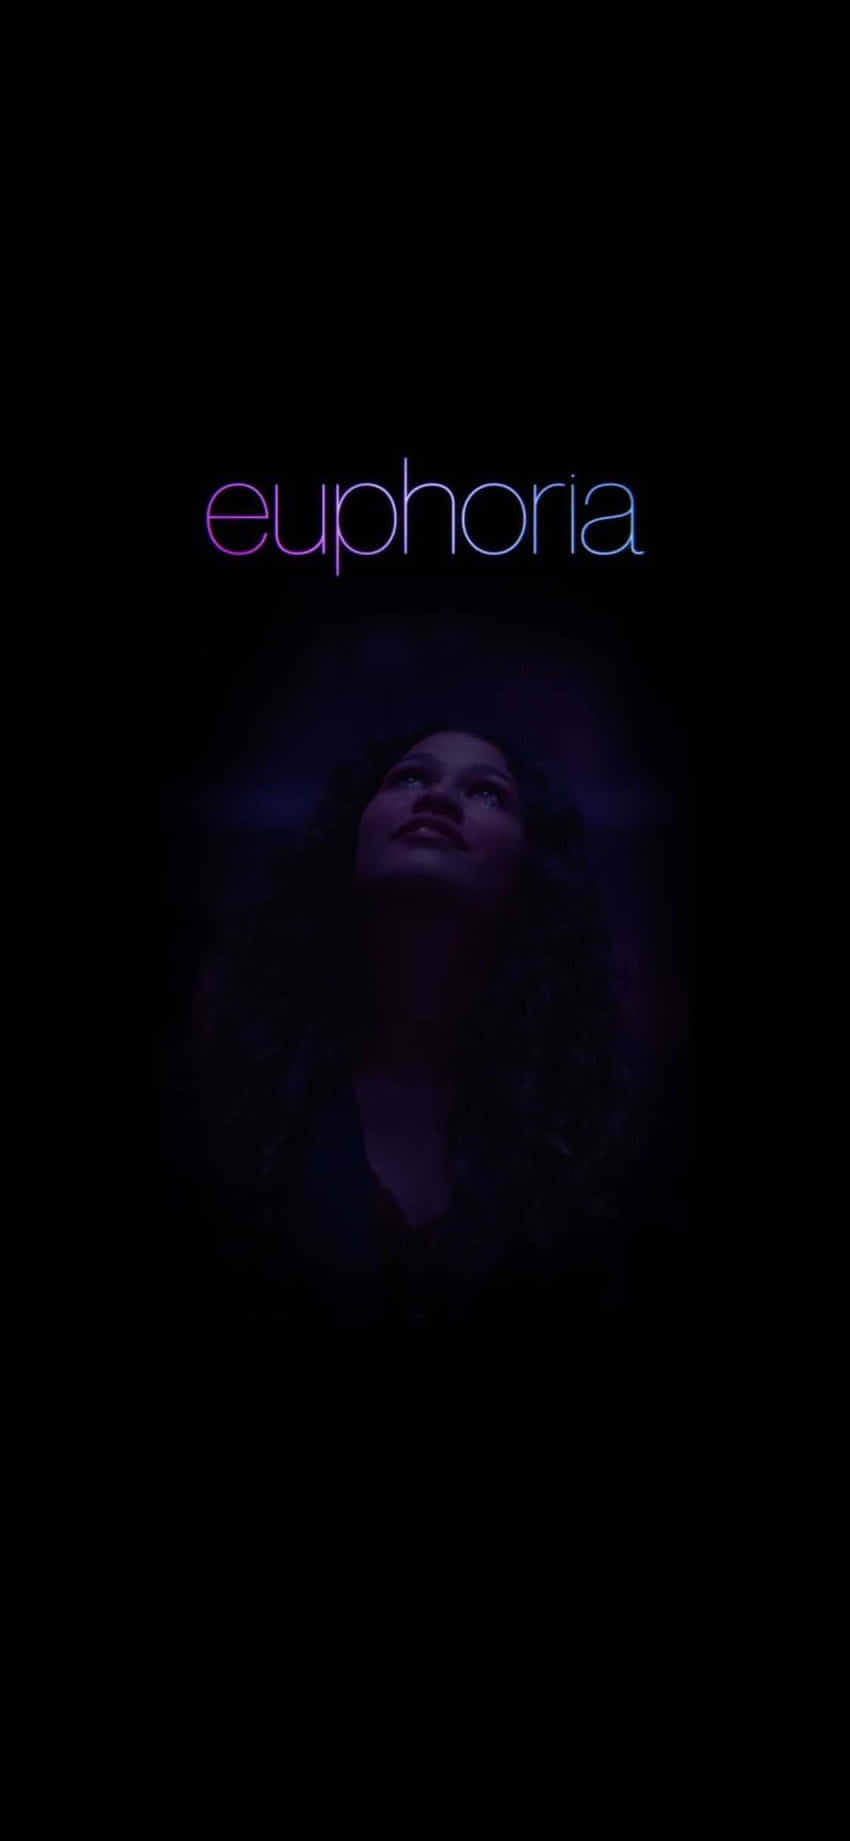 Celebratu Individualidad Con Euphoria Hbo En Tu Iphone. Fondo de pantalla